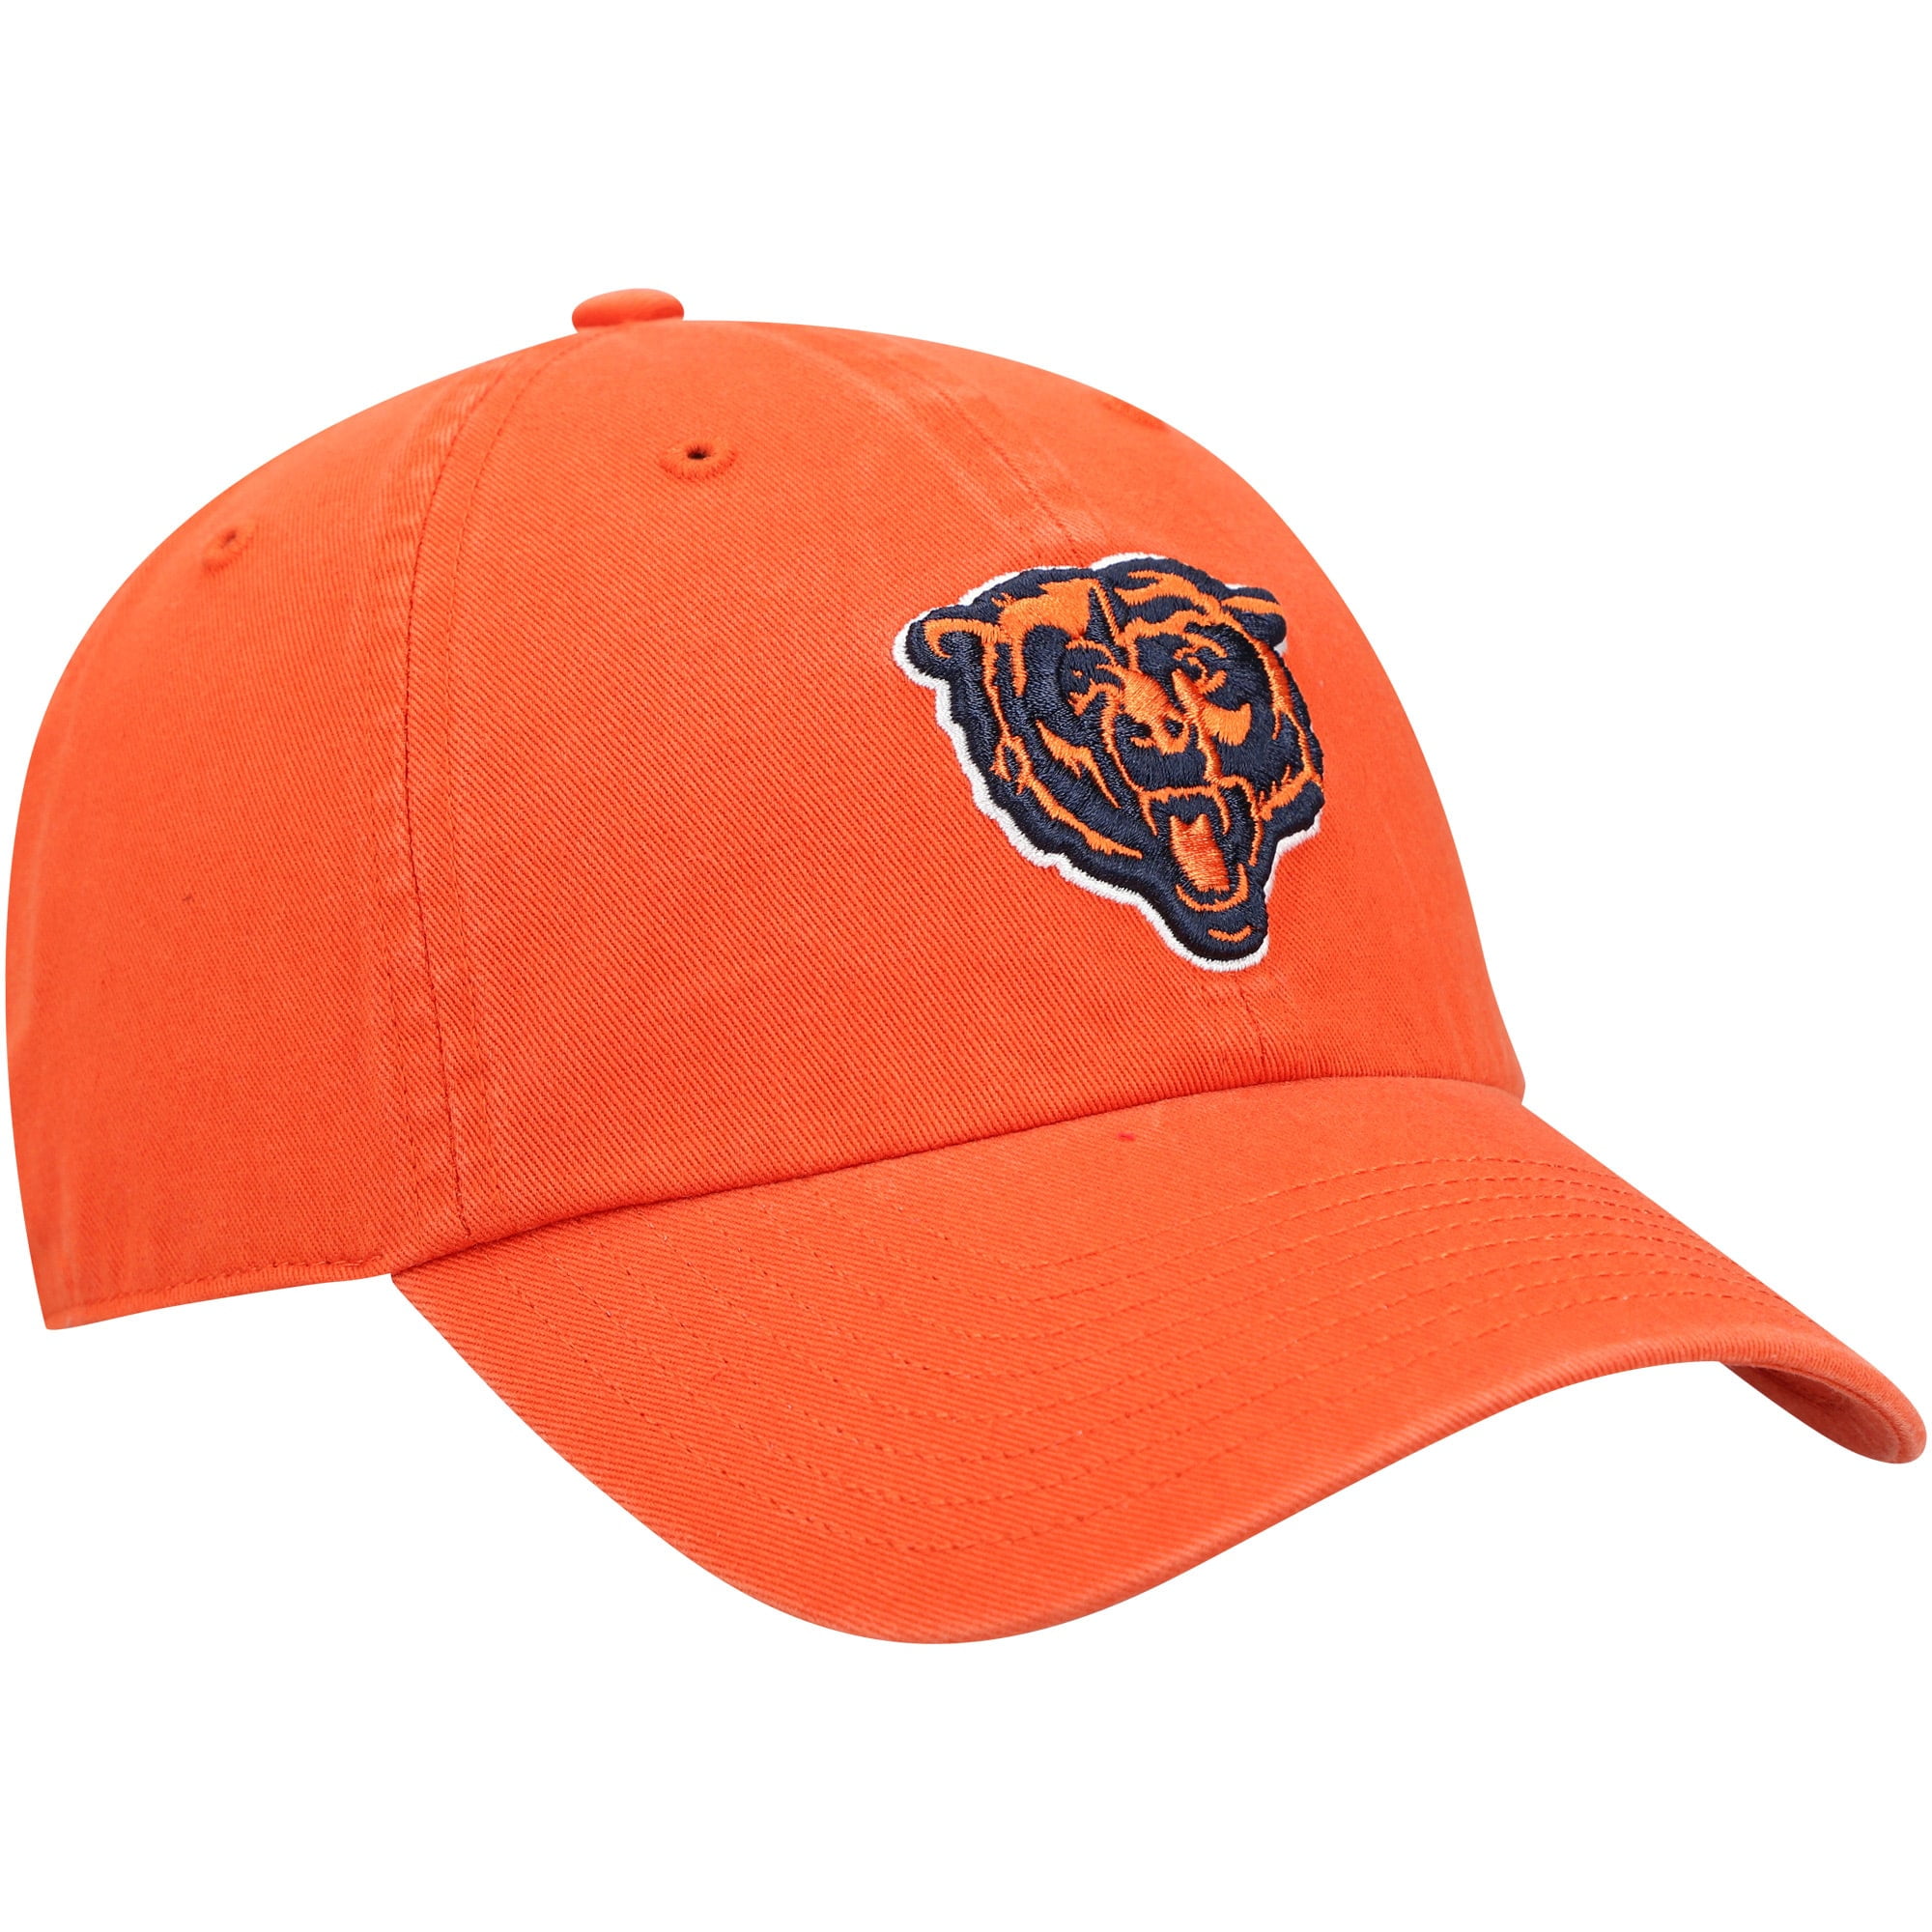 chicago bears hard hat